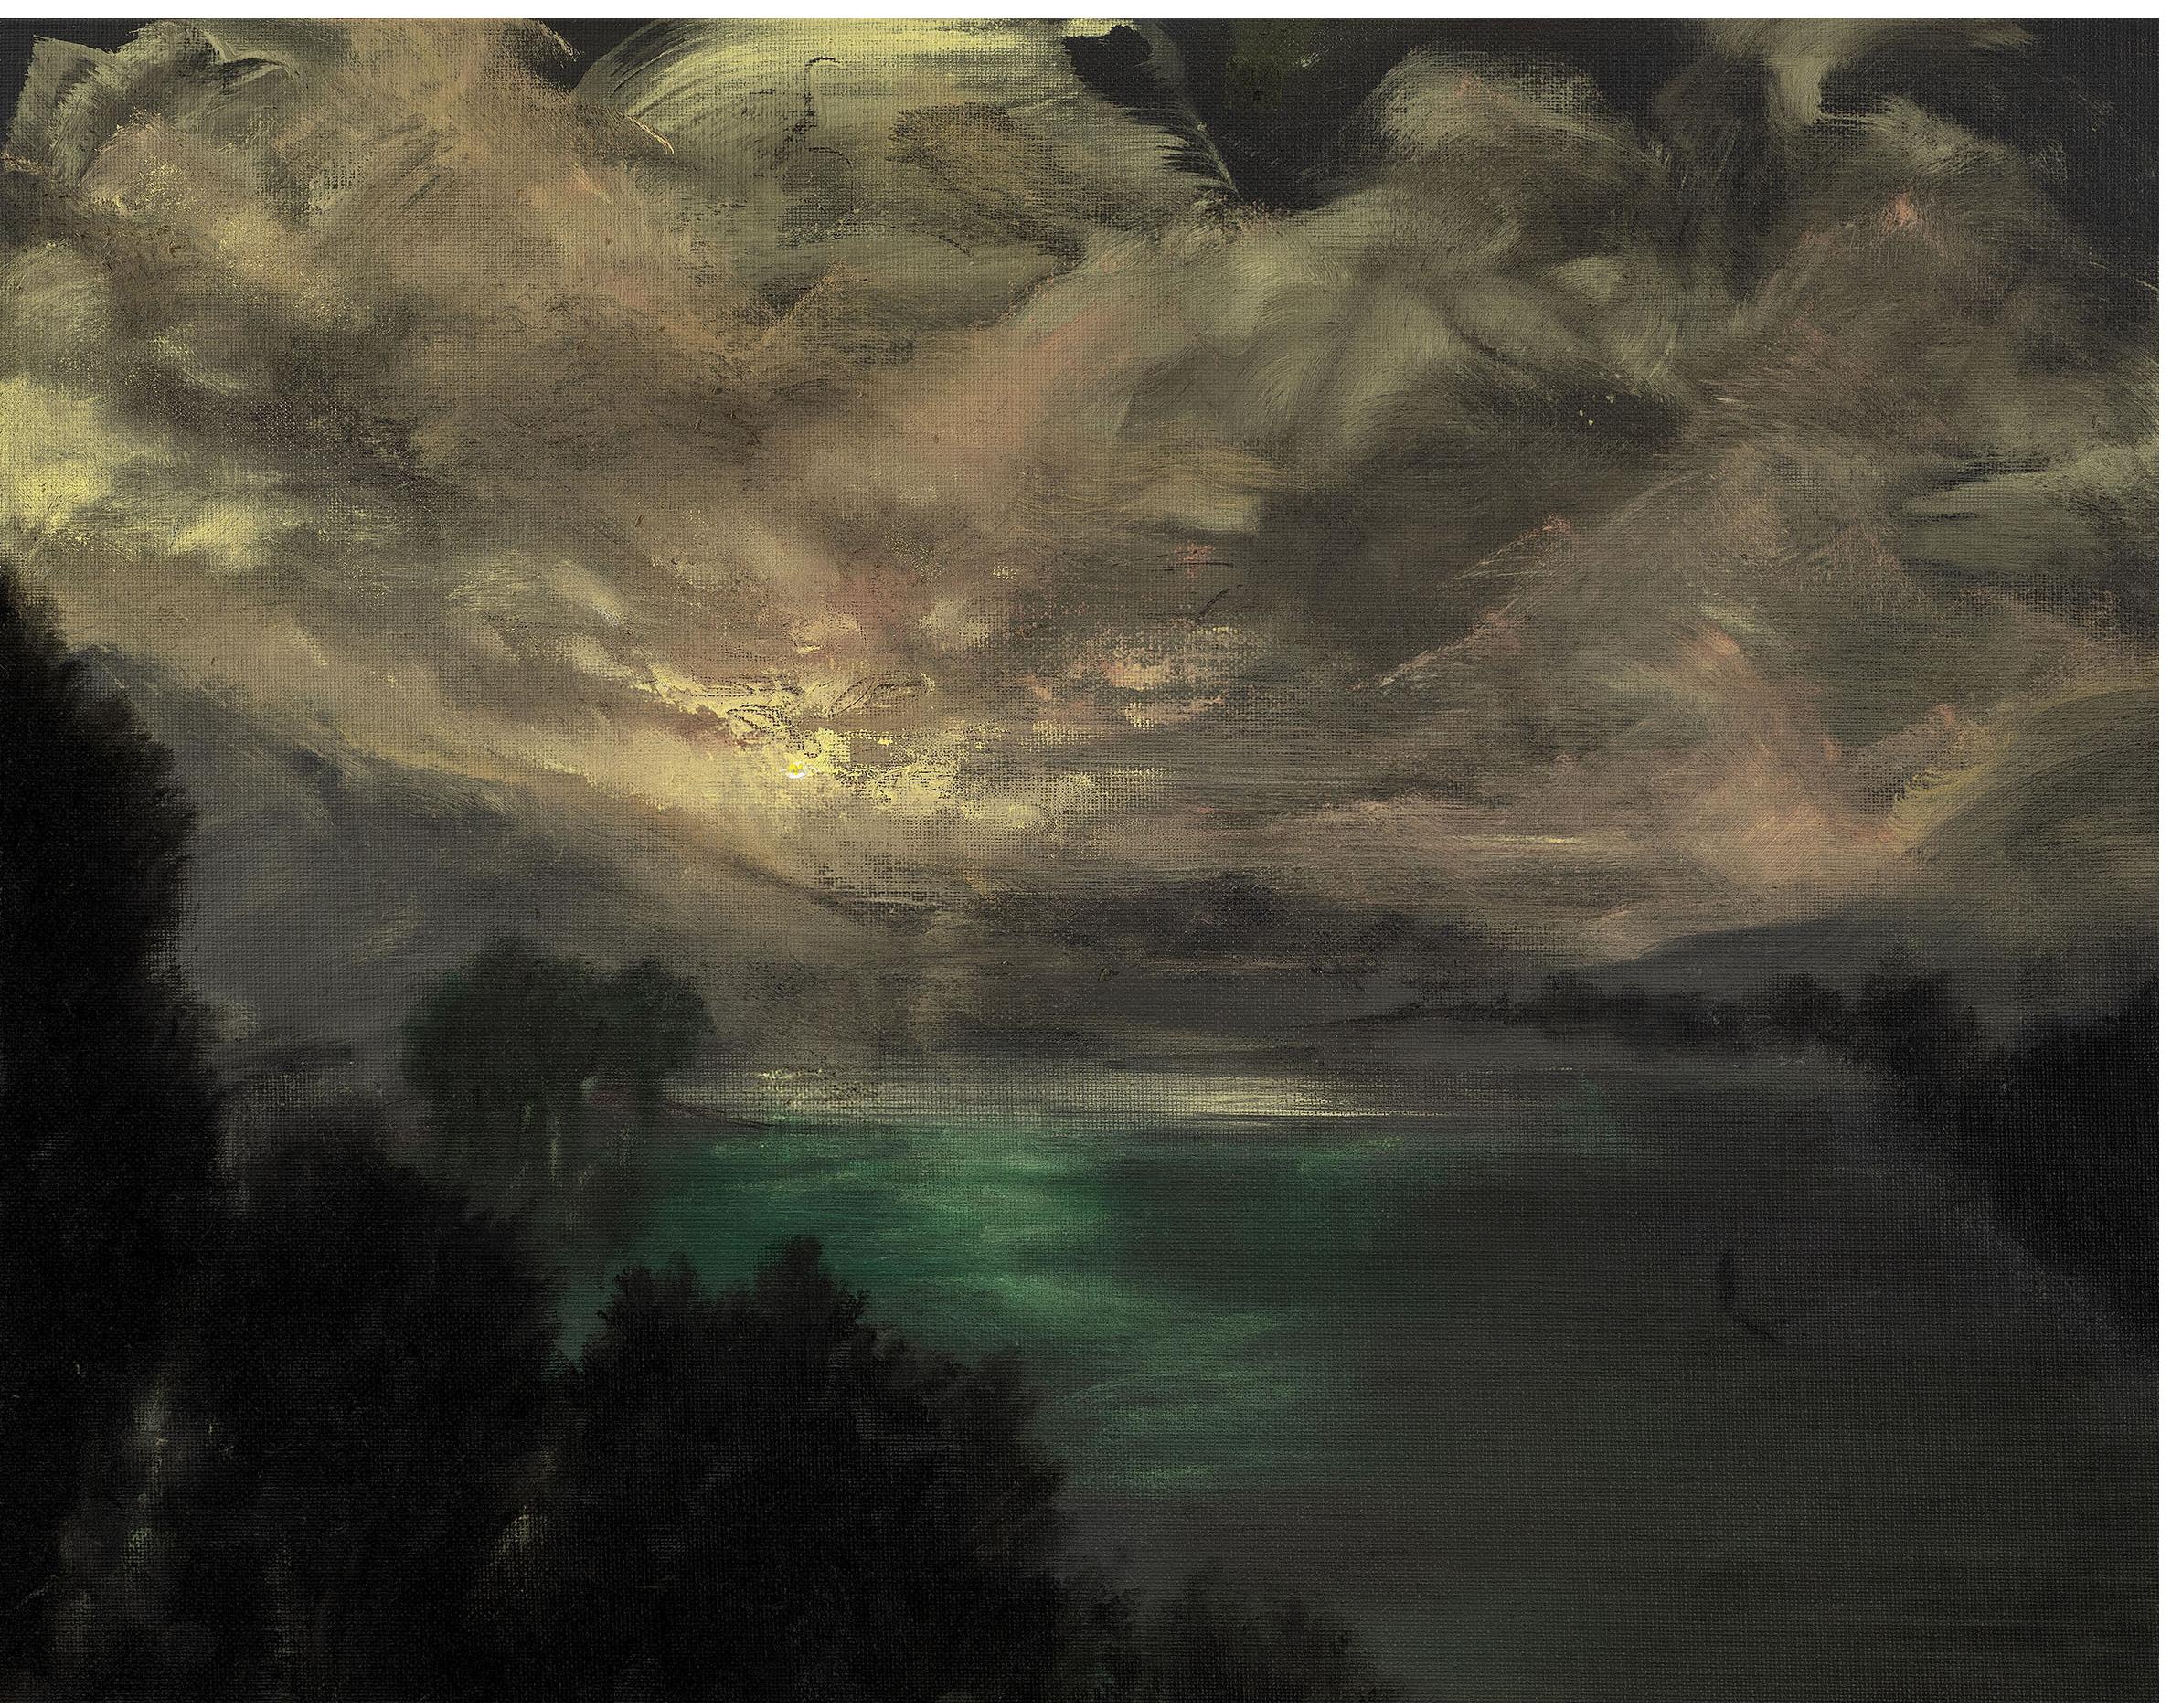 Matthew Bateson - "A Distant Light", oil on canvas board, 40 x 50 cm